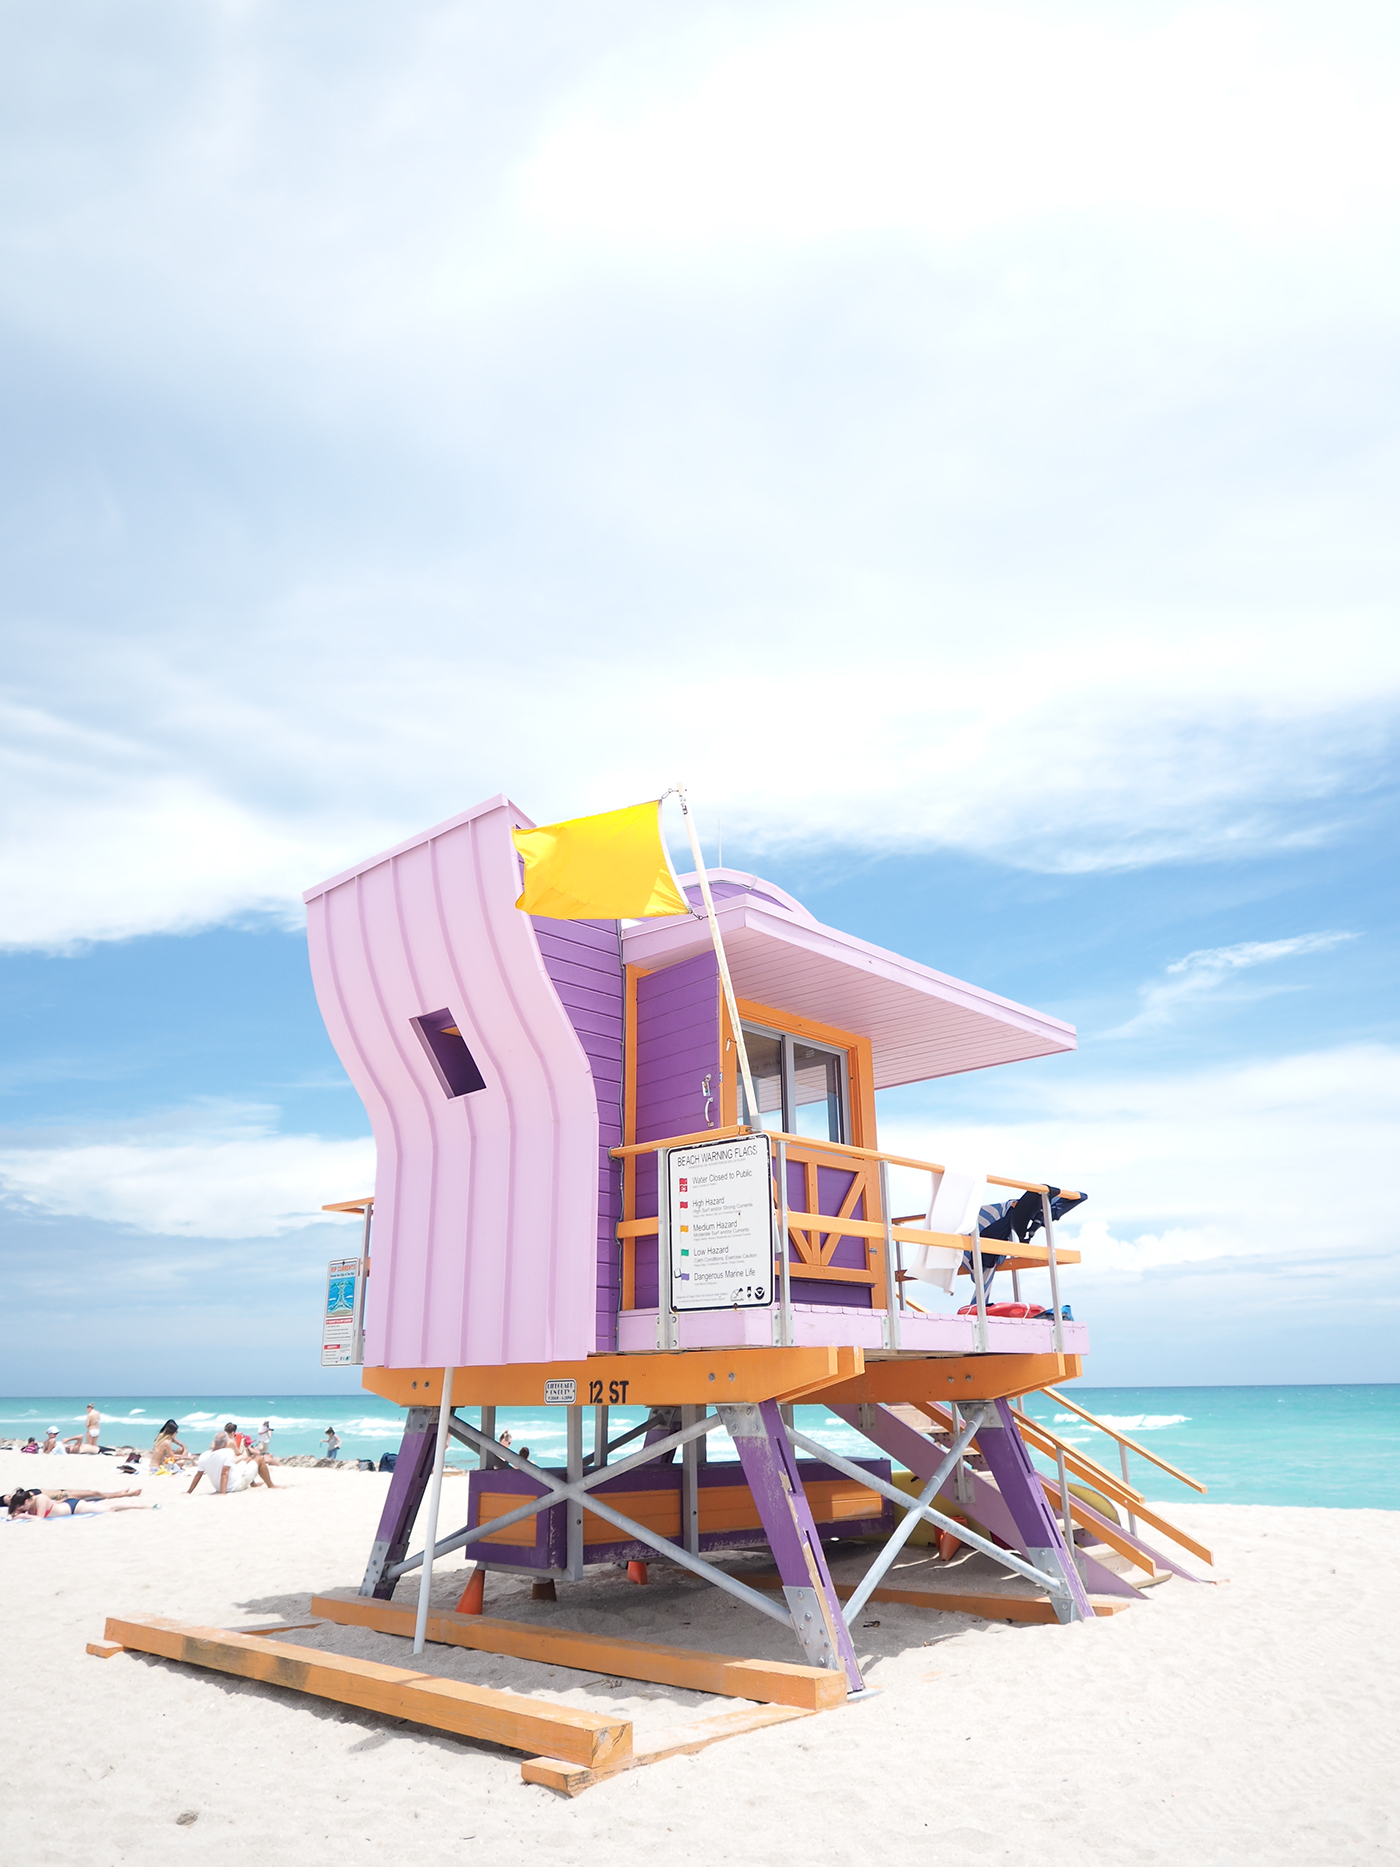 Miami beach lifeguard towers